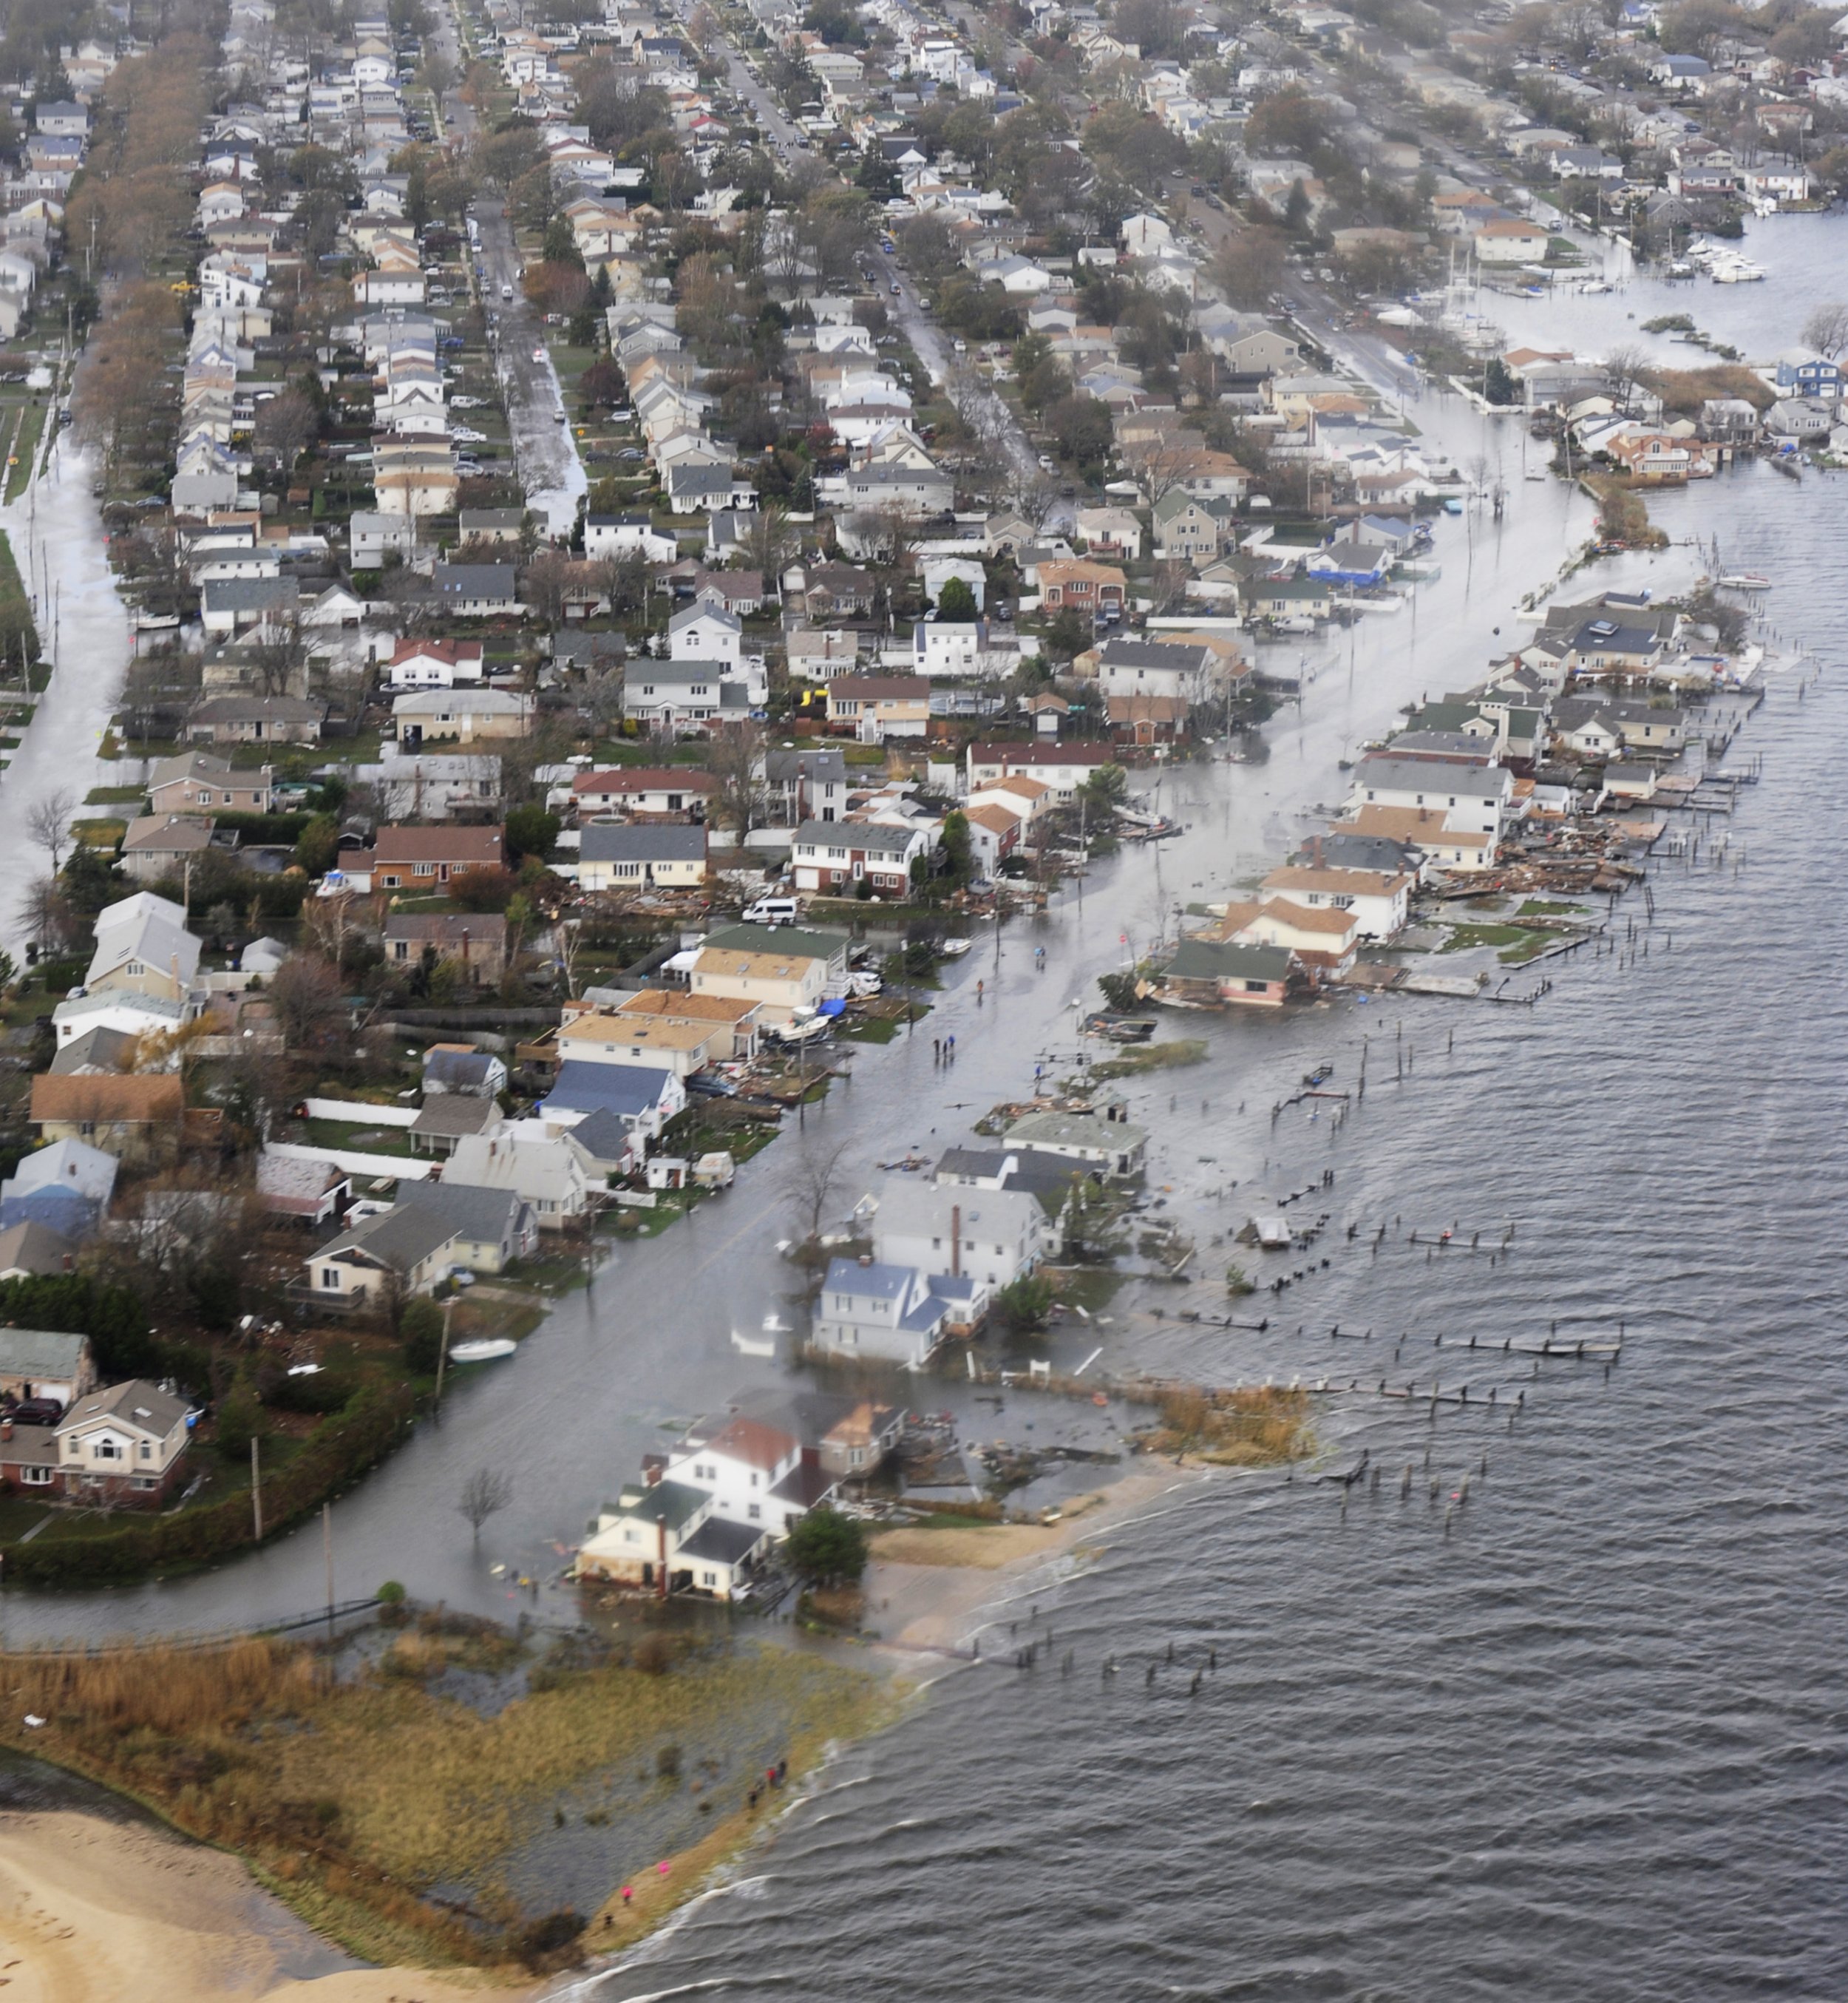 New York Flooding From Hurricane Sandy